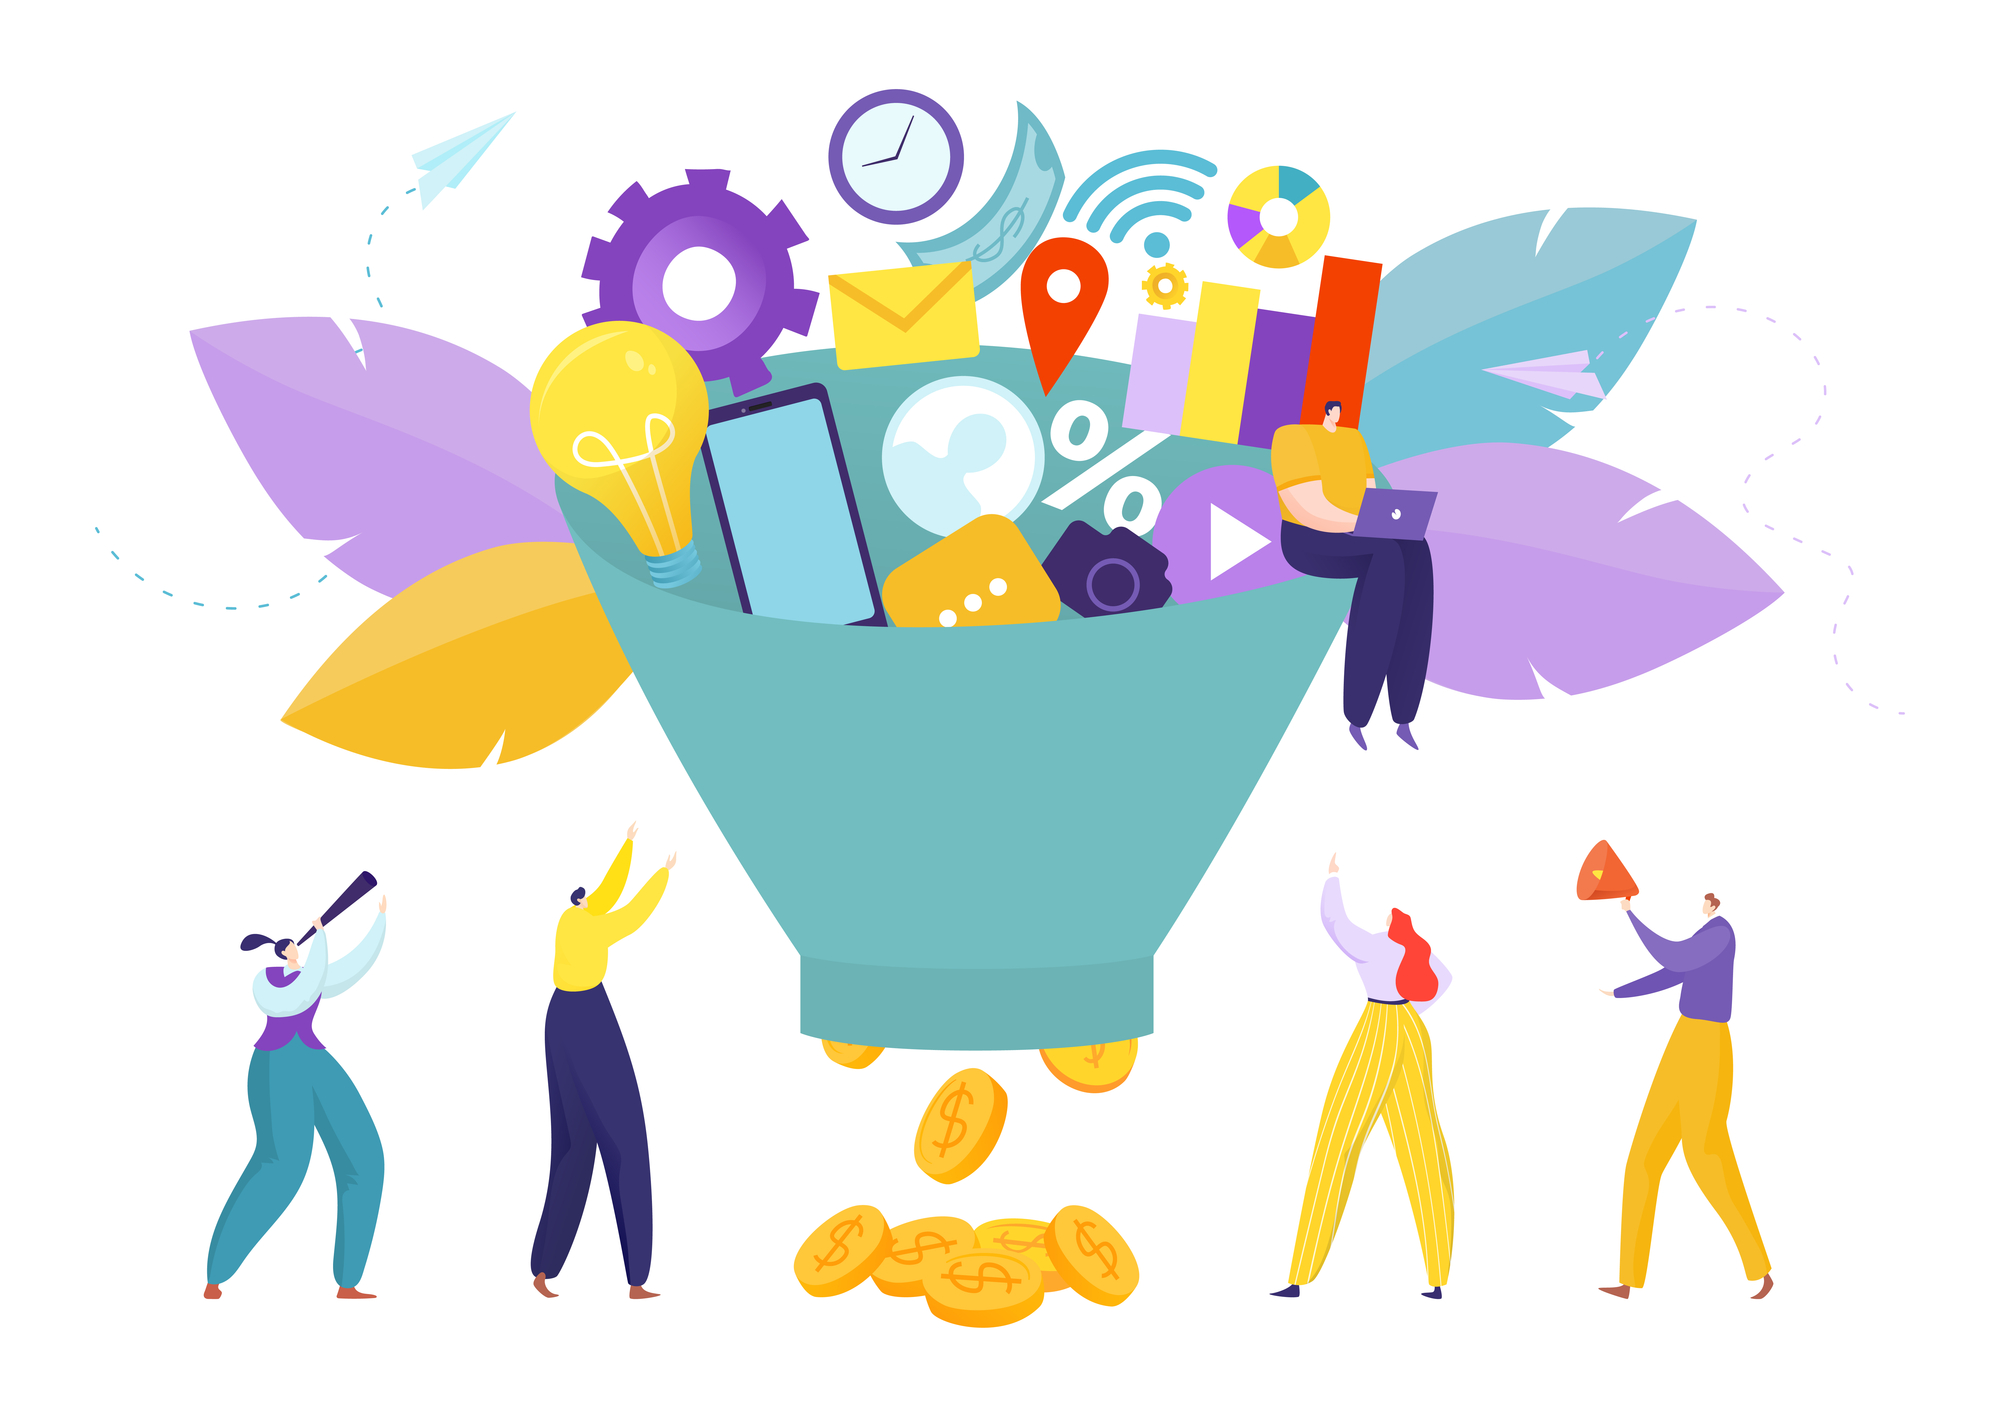 Business digital marketing with funnel, vector illustration. Internet media optimization, people social strategy concept.